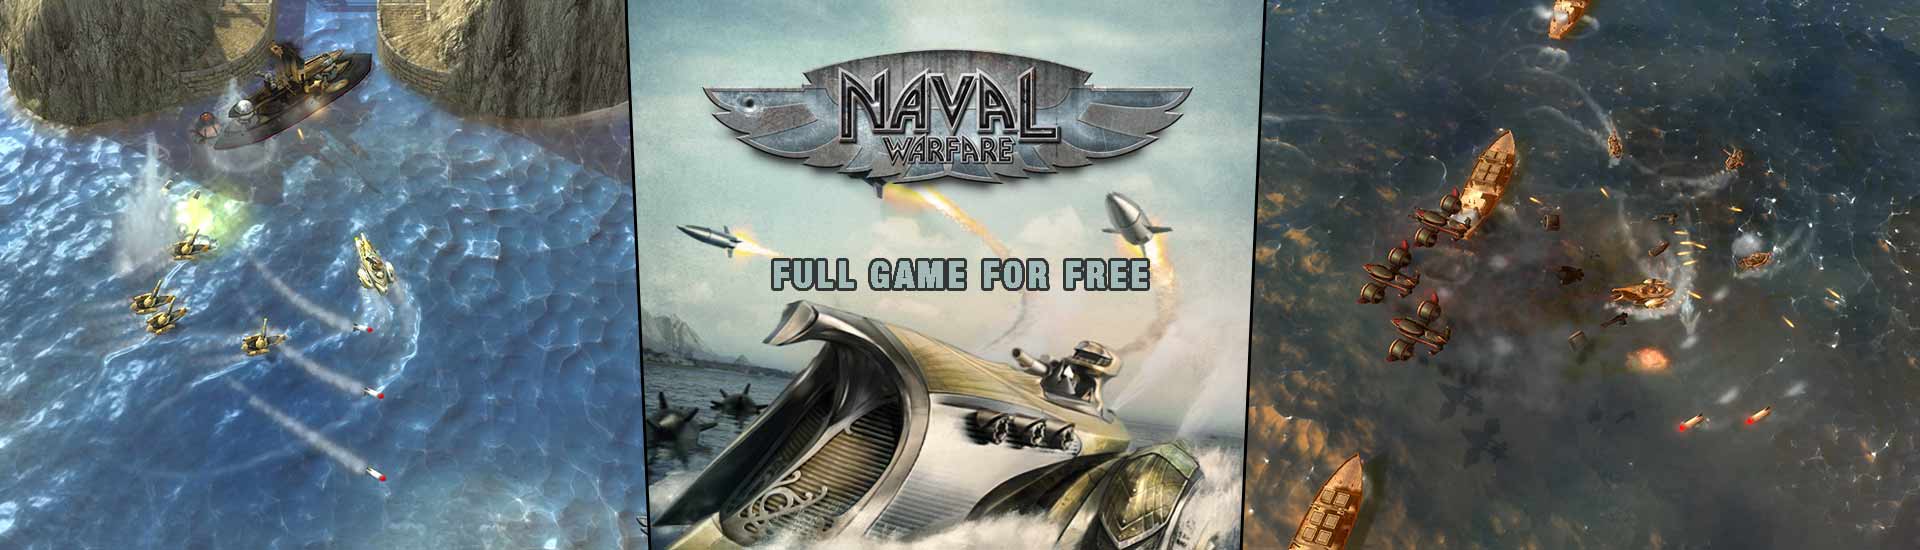 naval-warfare-[pc-game]